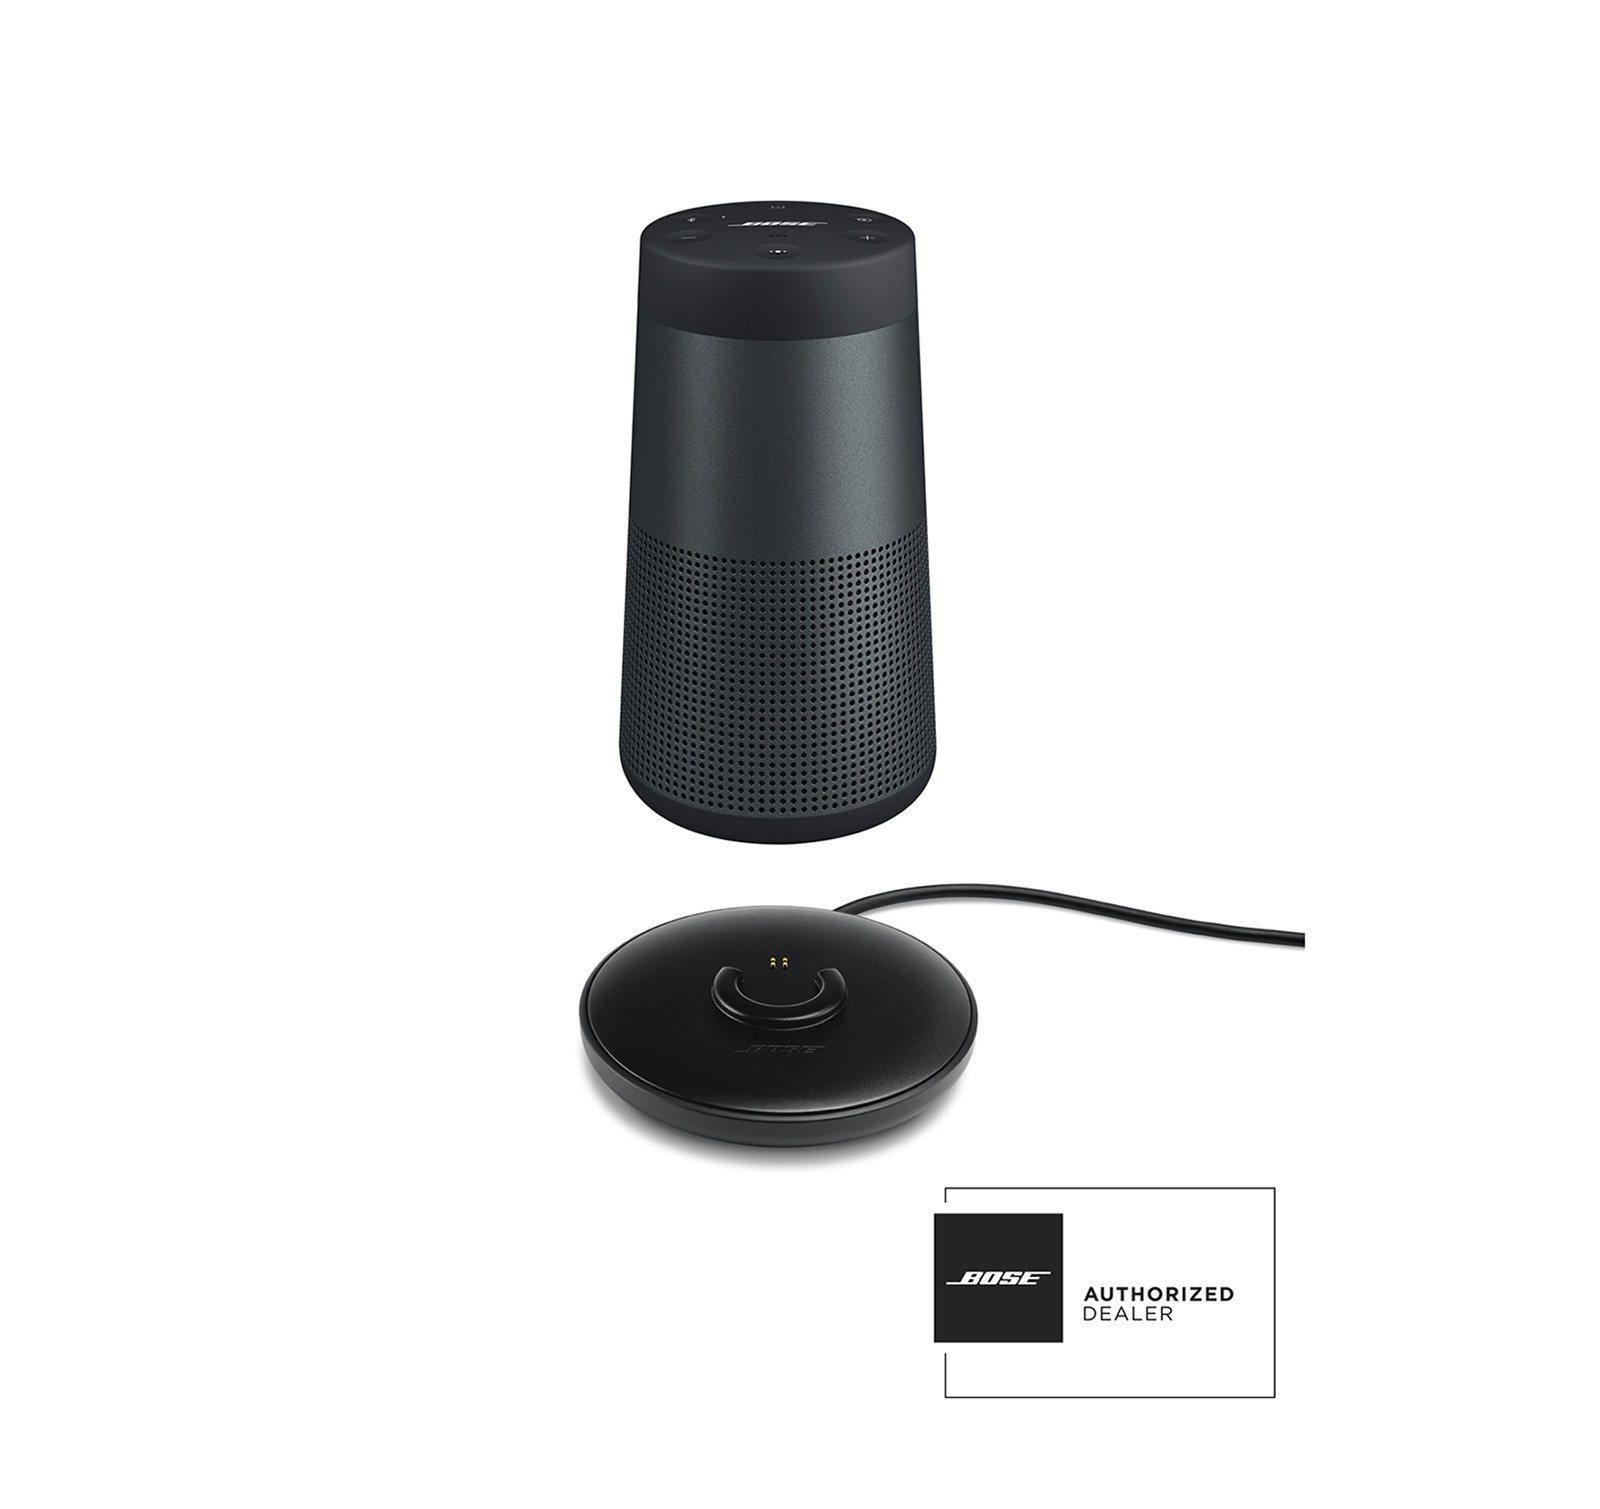 Loa Bose SoundLink Revolve Bluetooth cảm giác sử dụng 